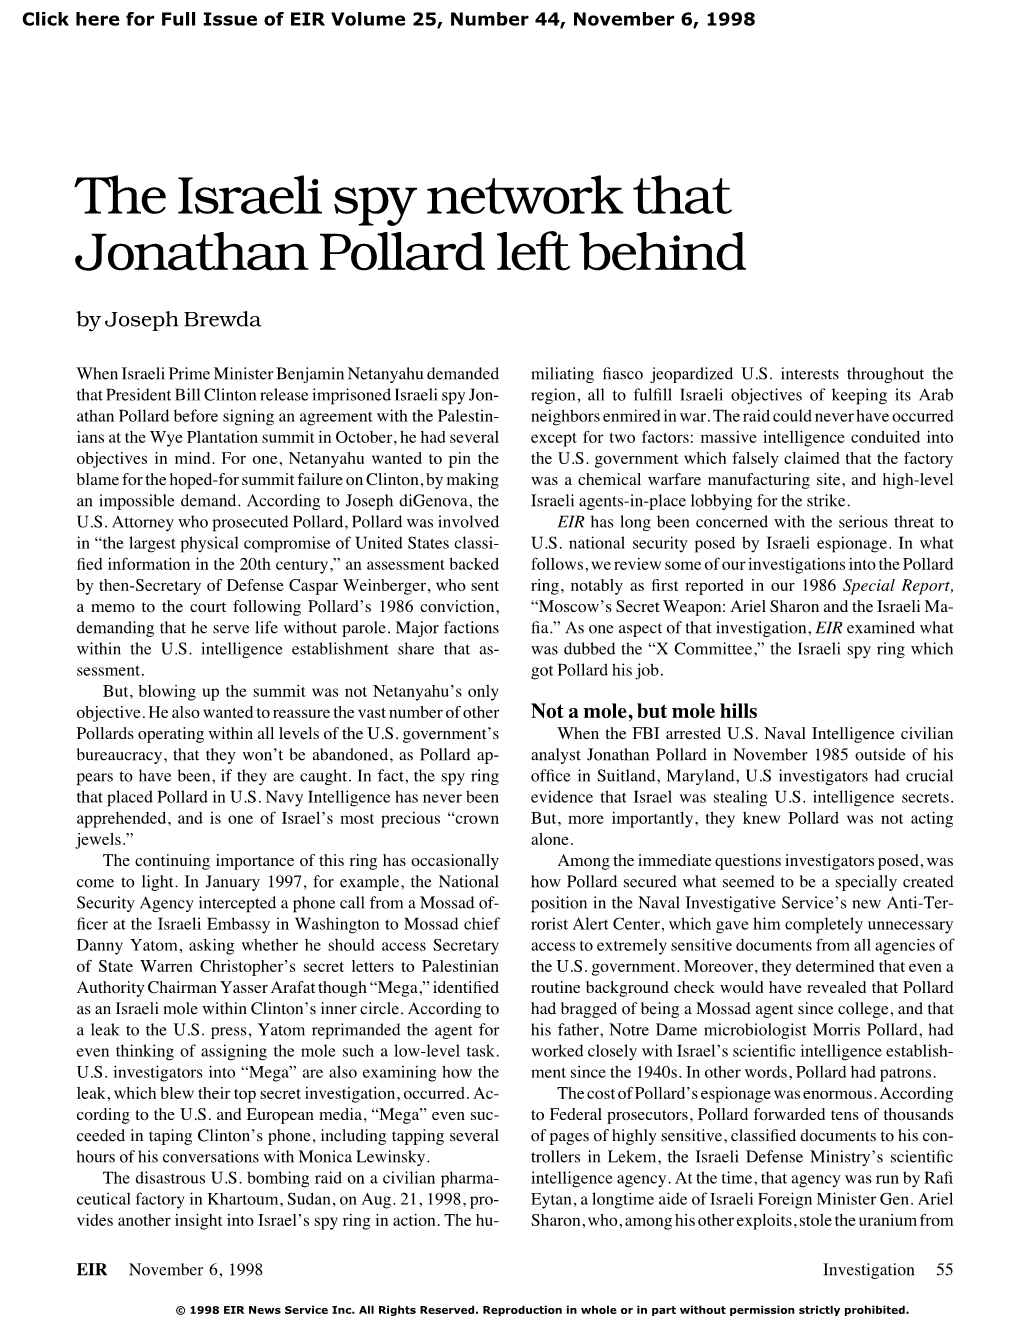 The Israeli Spy Network That Jonathan Pollard Left Behind